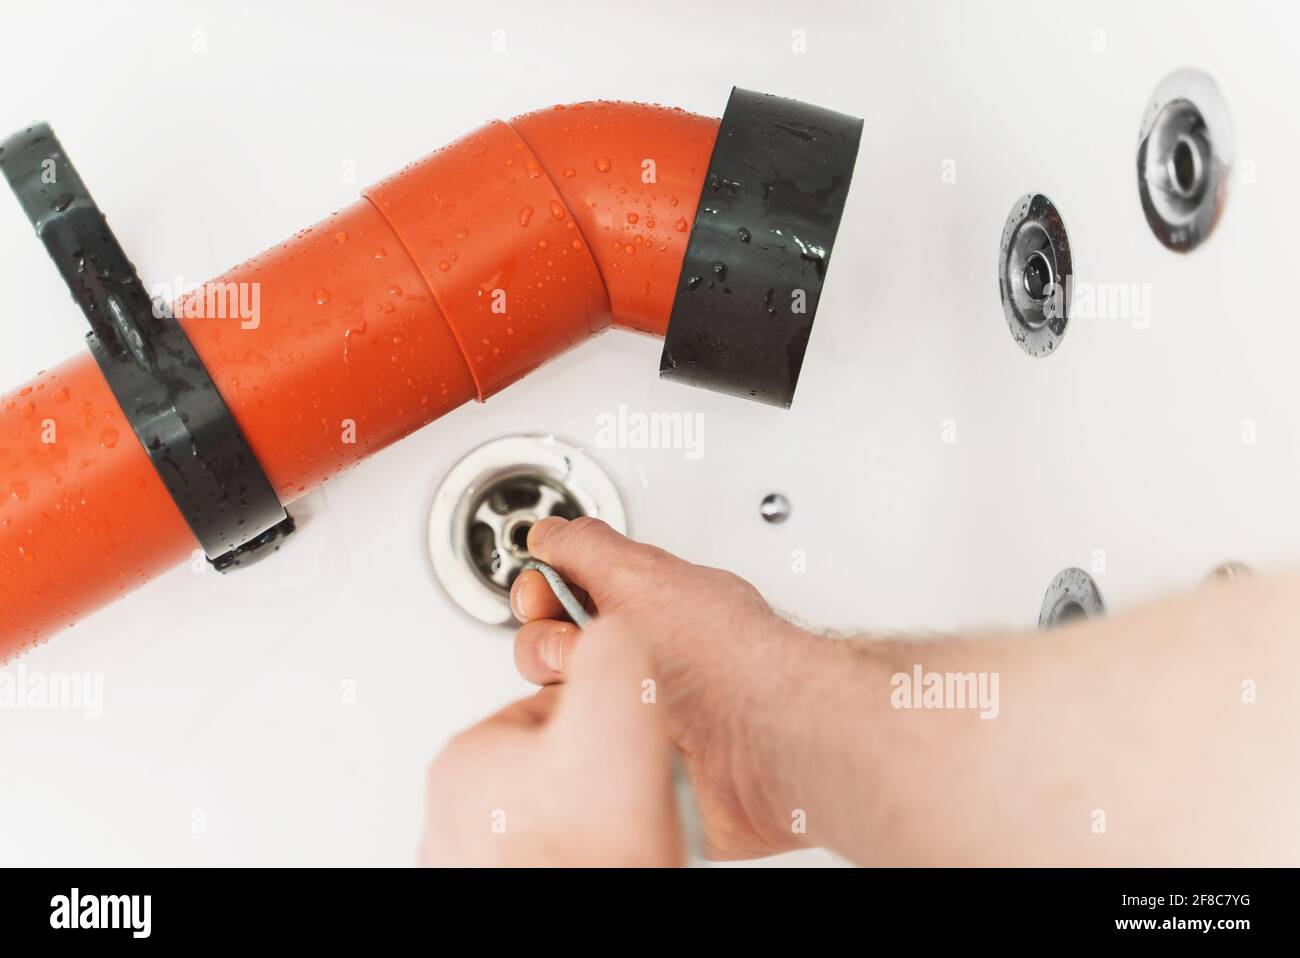 https://c8.alamy.com/comp/2F8C7YG/plumber-using-drain-snake-to-unclog-bathtub-2F8C7YG.jpg